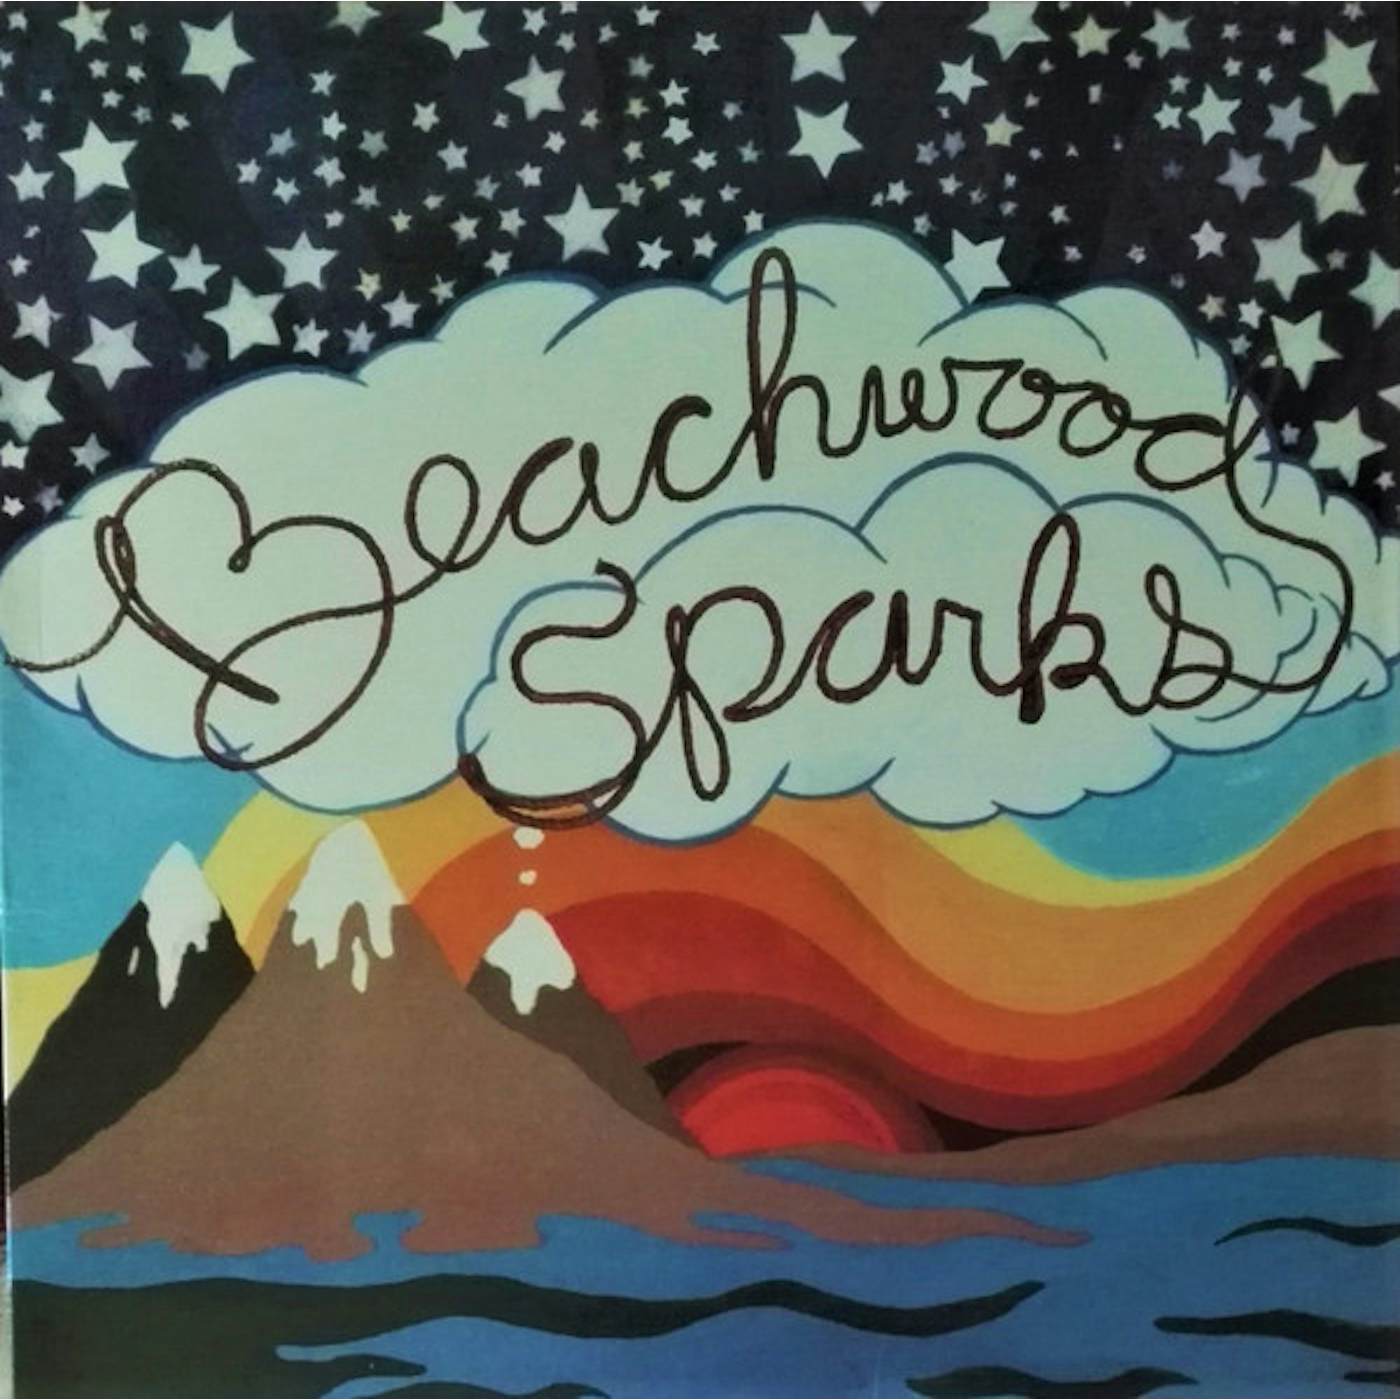 Beachwood Sparks Vinyl Record